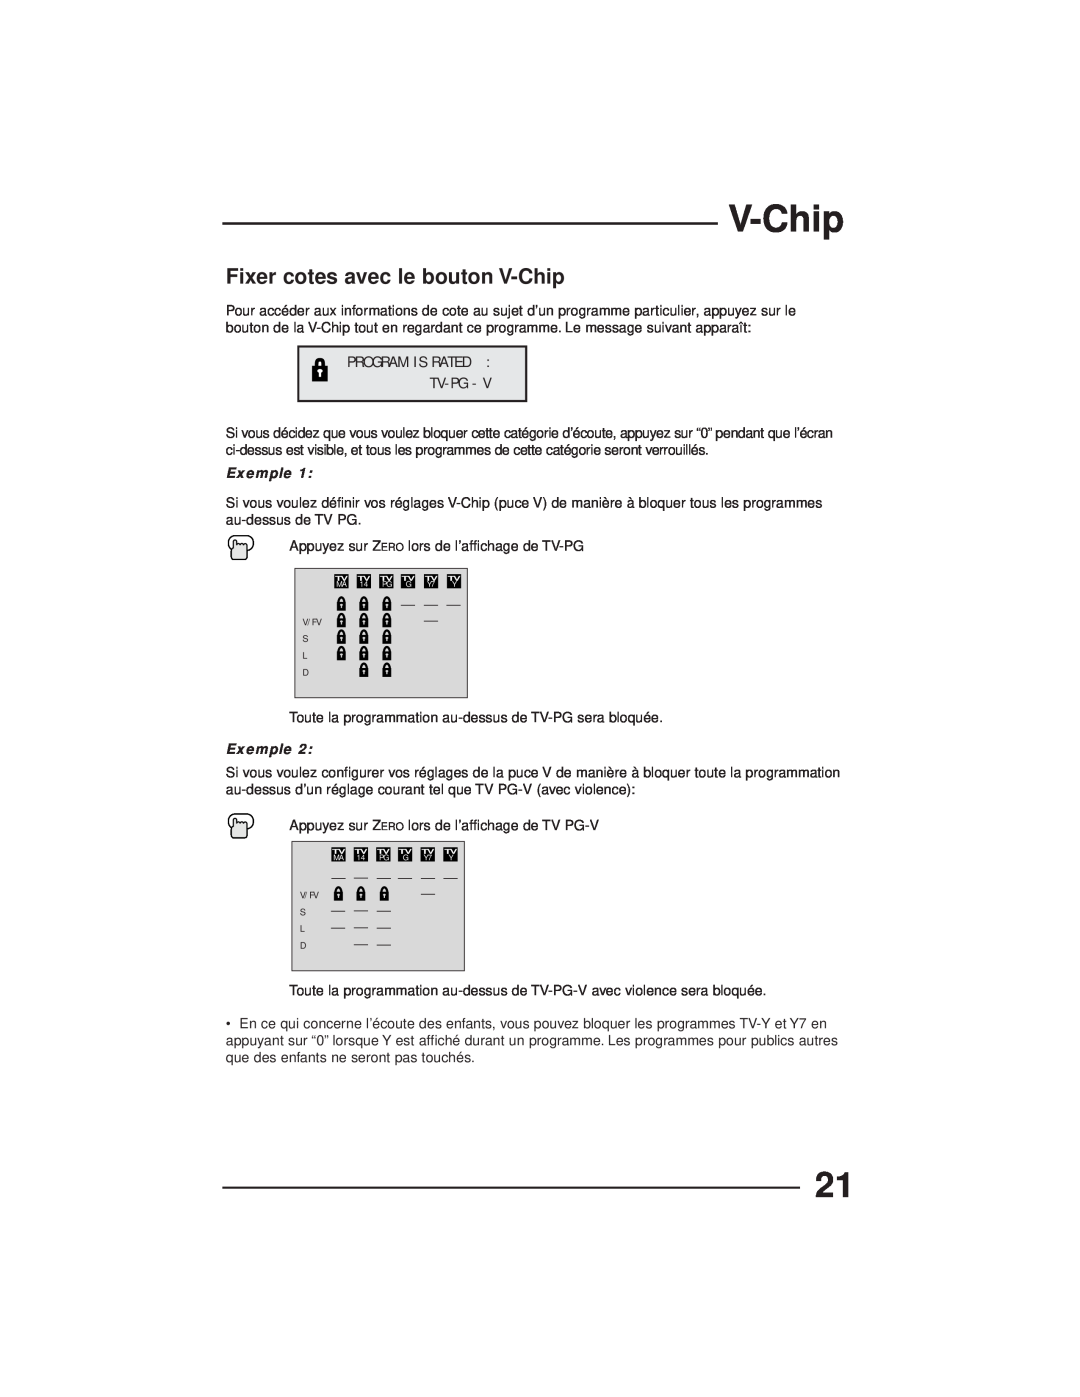 JVC AV-27GFH manual Fixer cotes avec le bouton V-Chip, Program Is Rated Tv-Pg, Exemple 